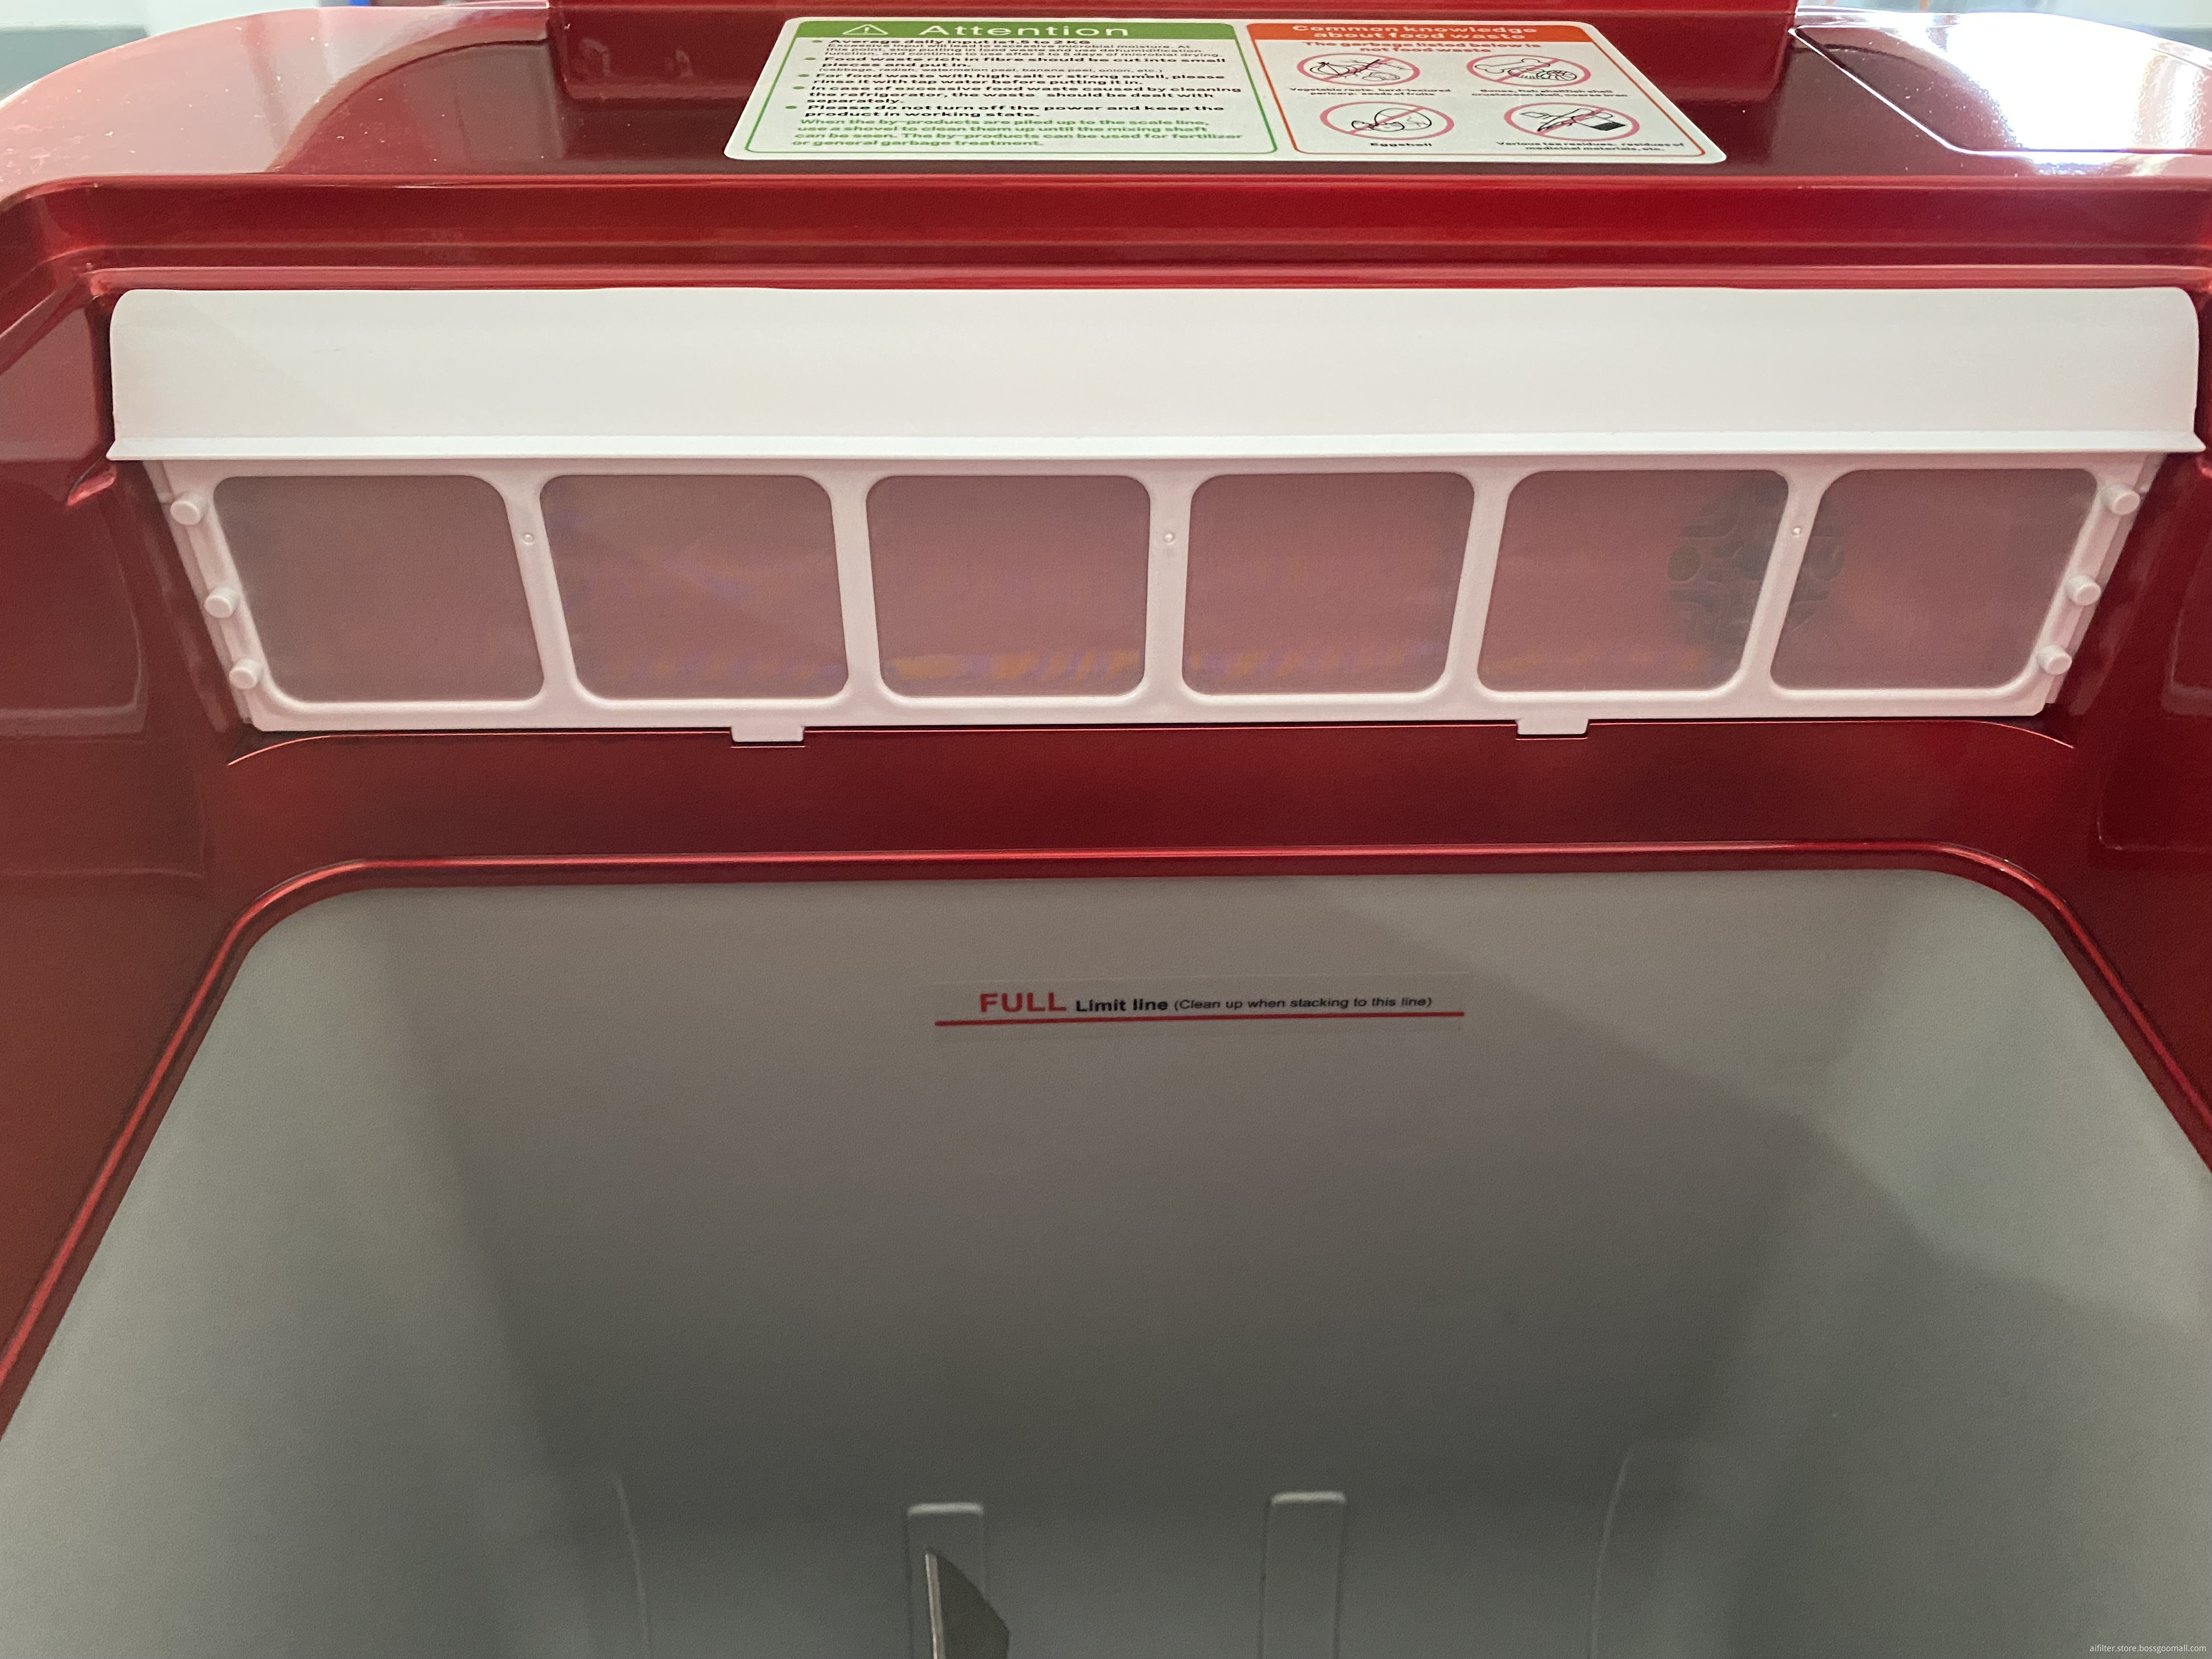 Aifilter Food Waste Grinder Processor Home Compost Machine